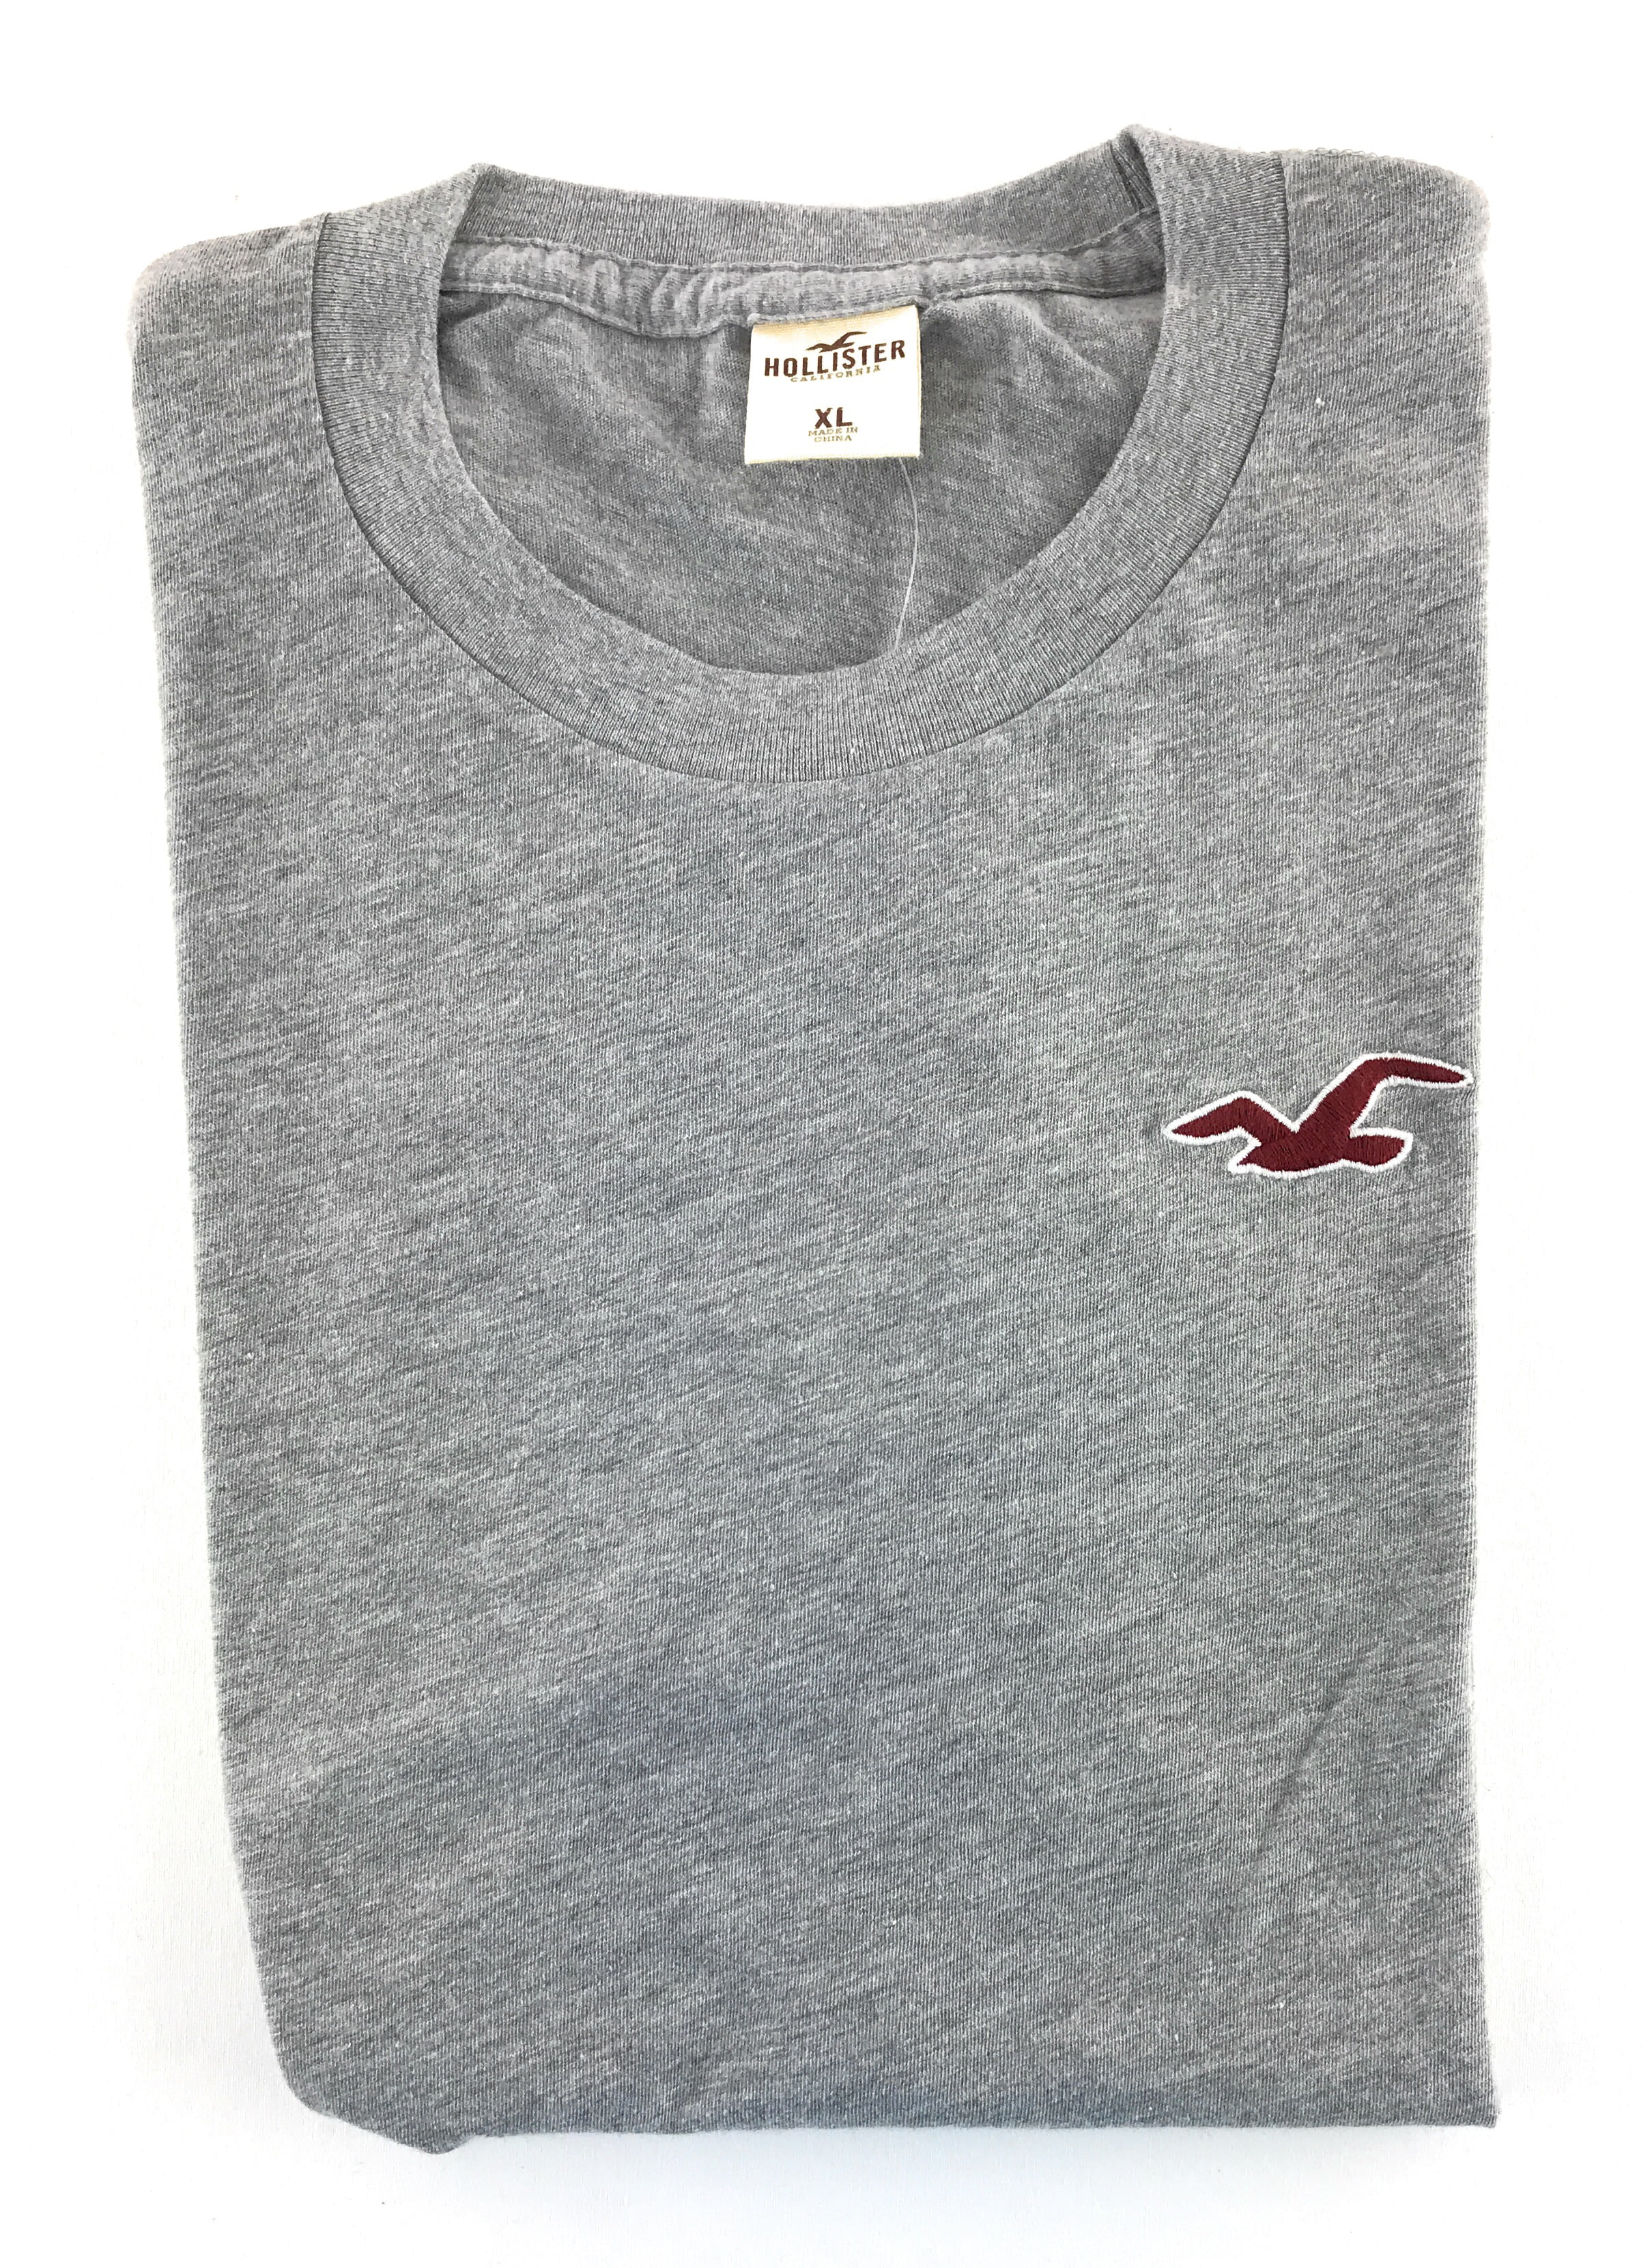 Hollister T-shirt Men's Classic Seagull Logo Printed Short Sleeve